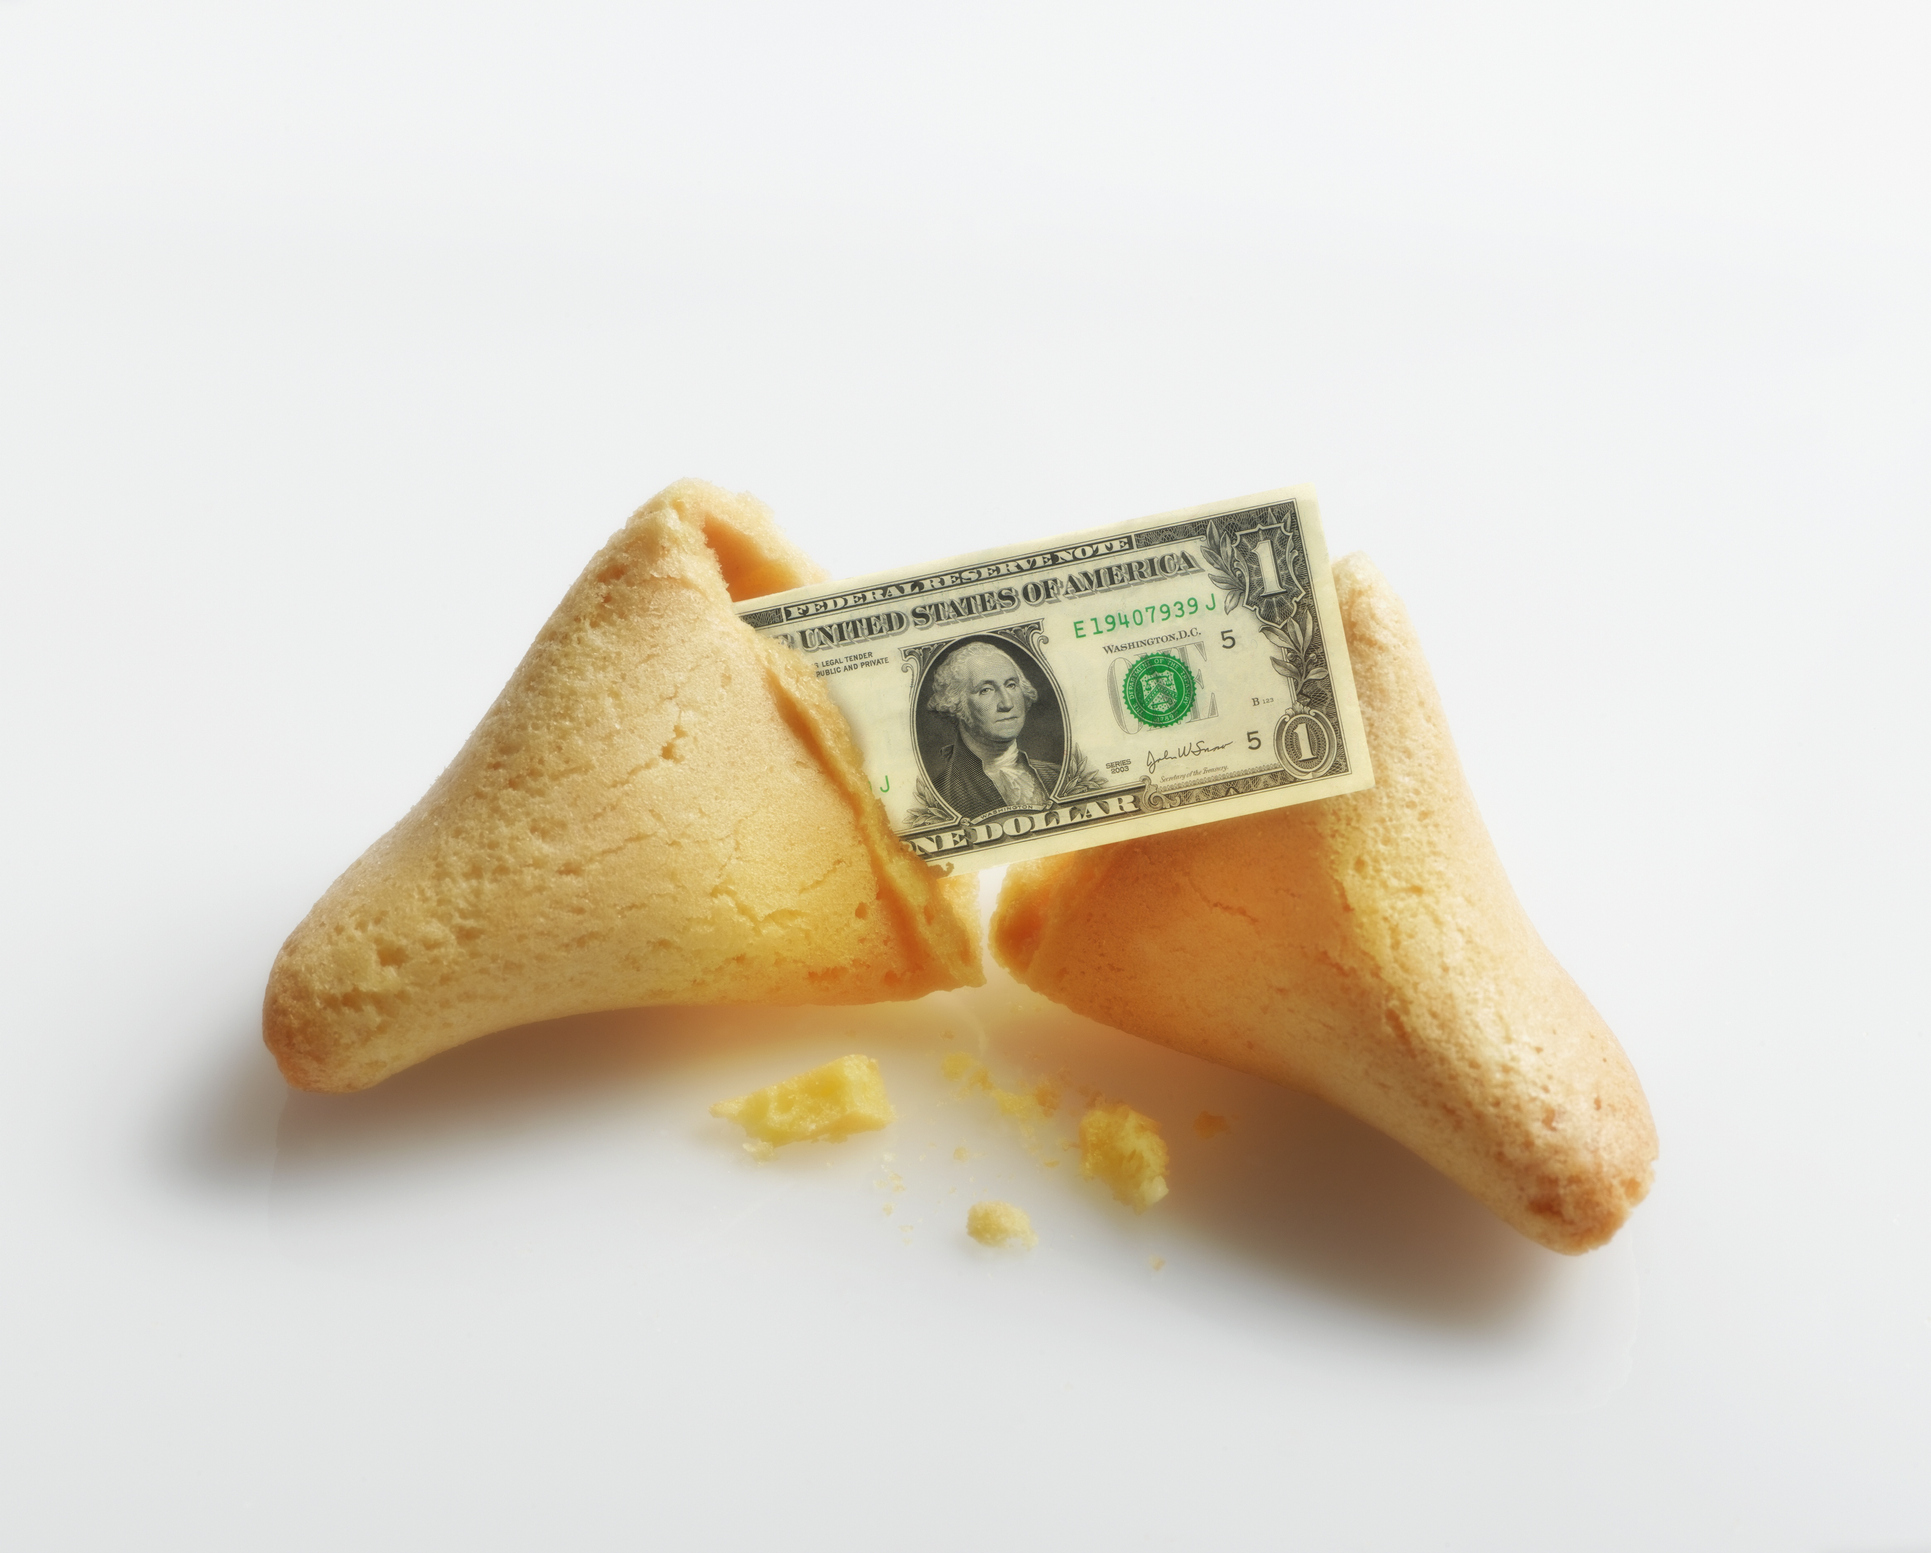 Broken fortune cookie with US dollars inside